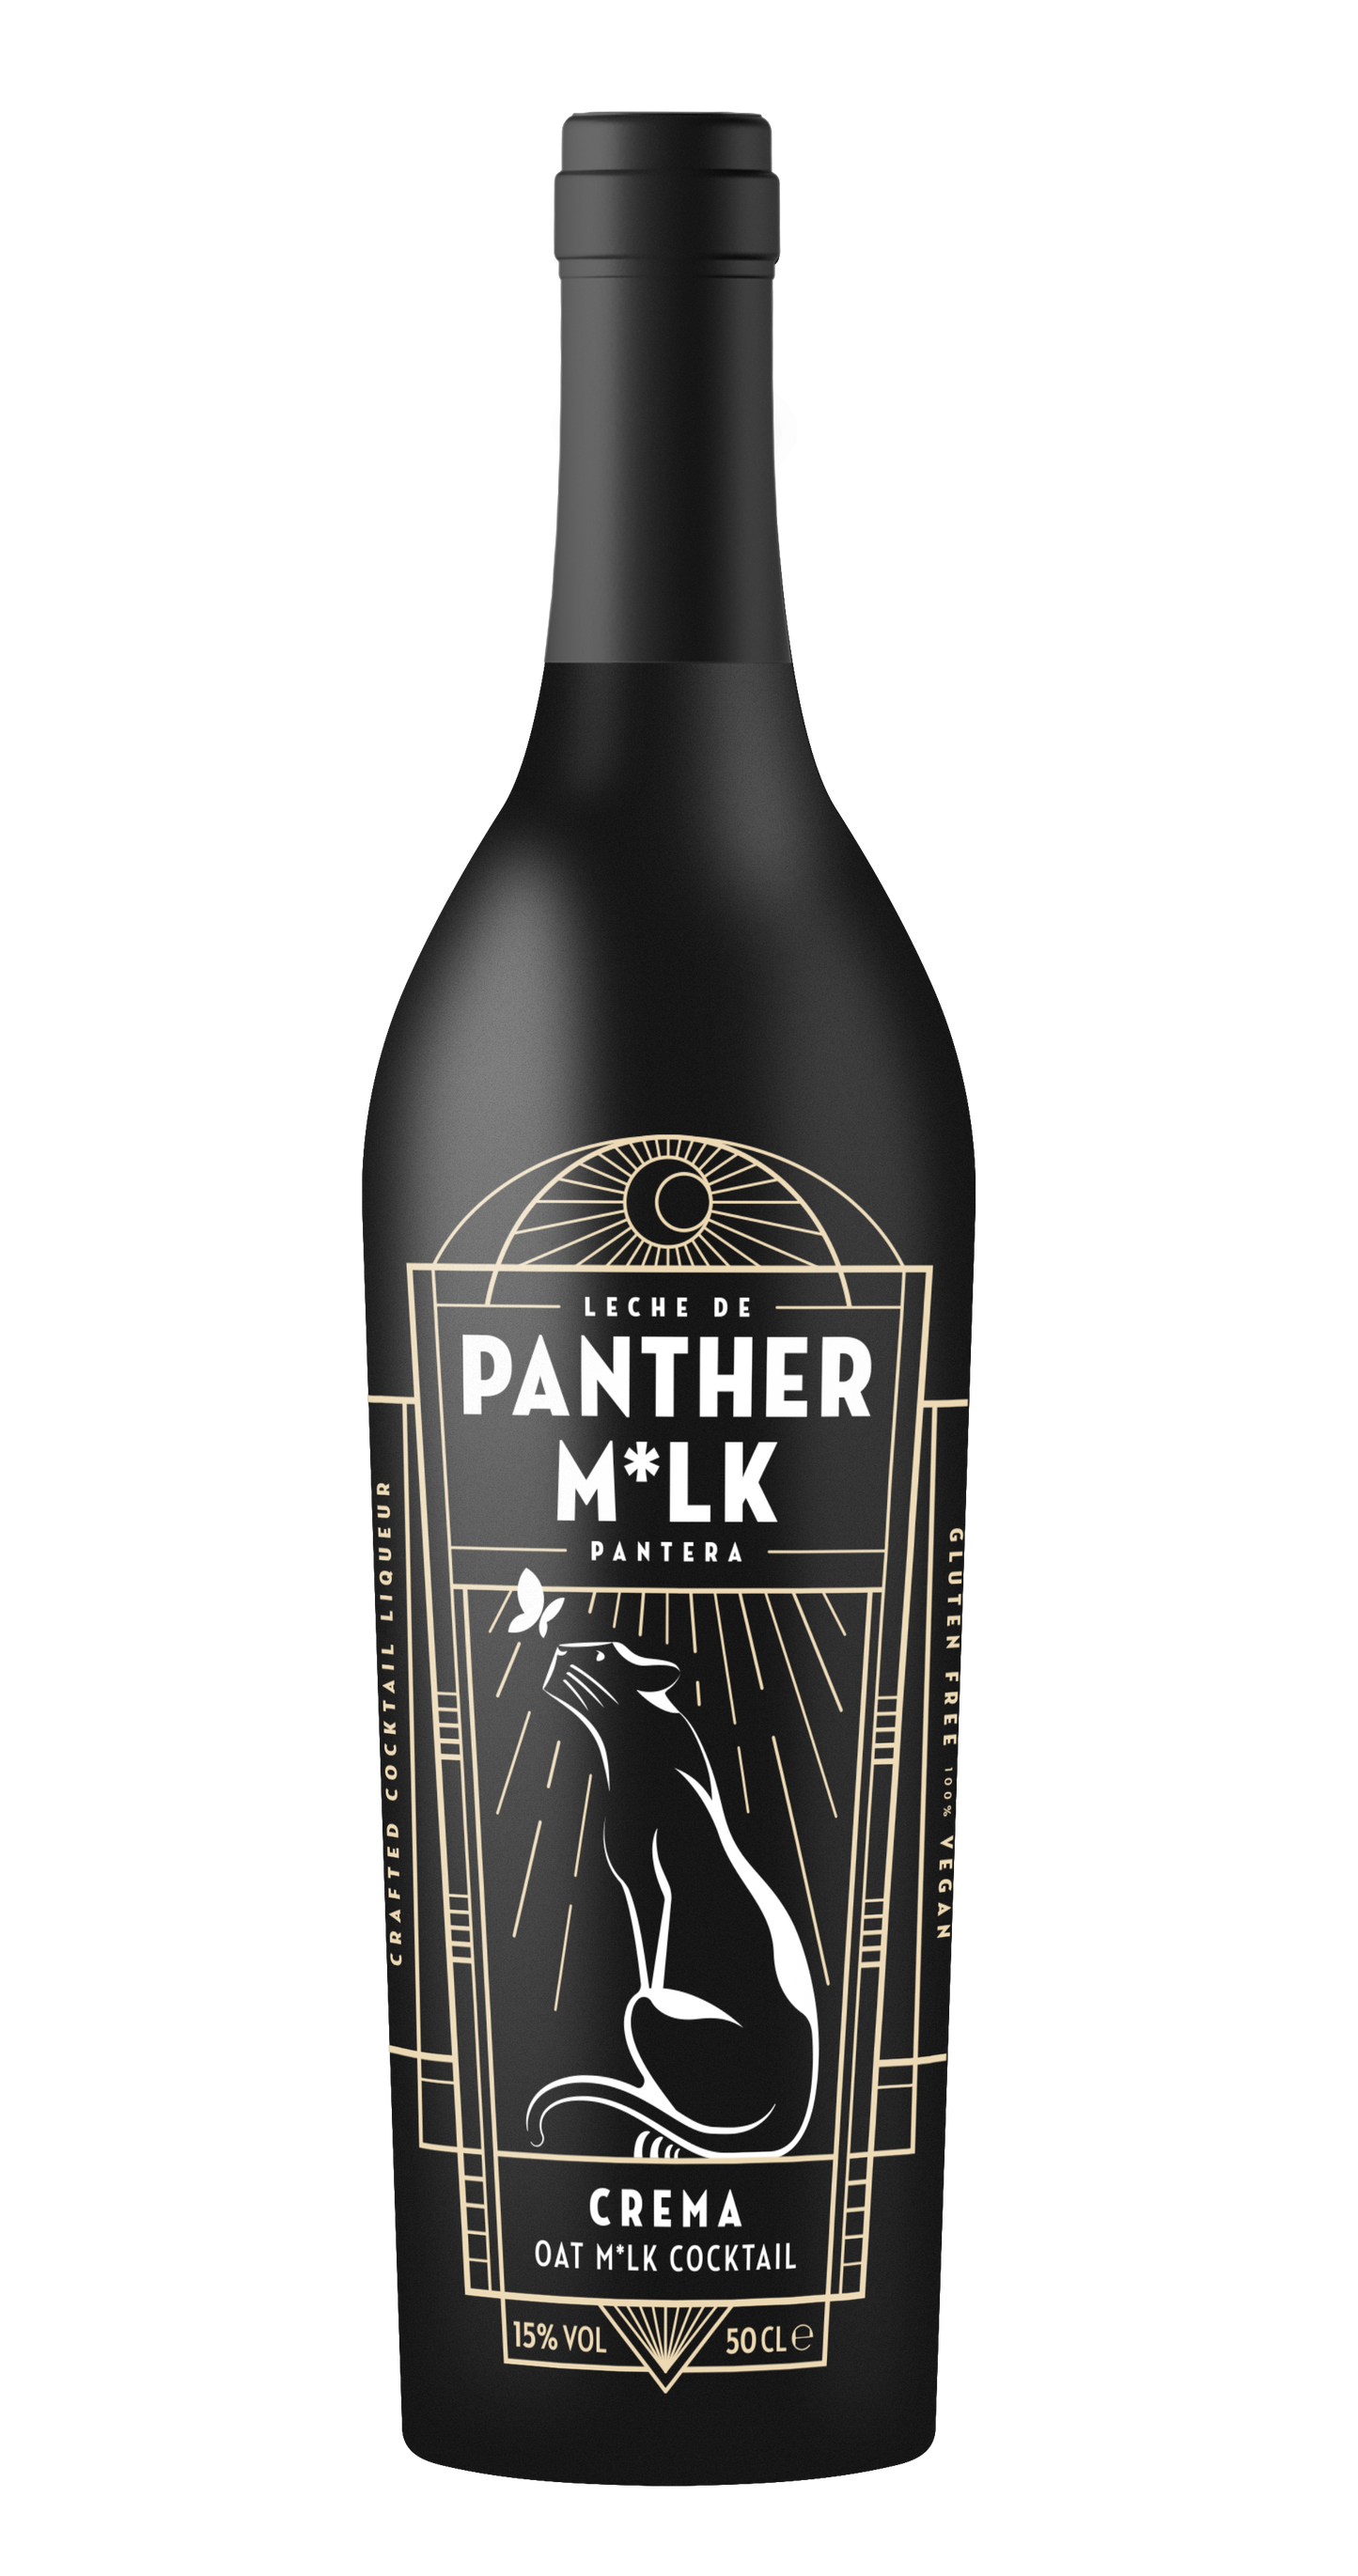 Panther M*lk Crema 50cl